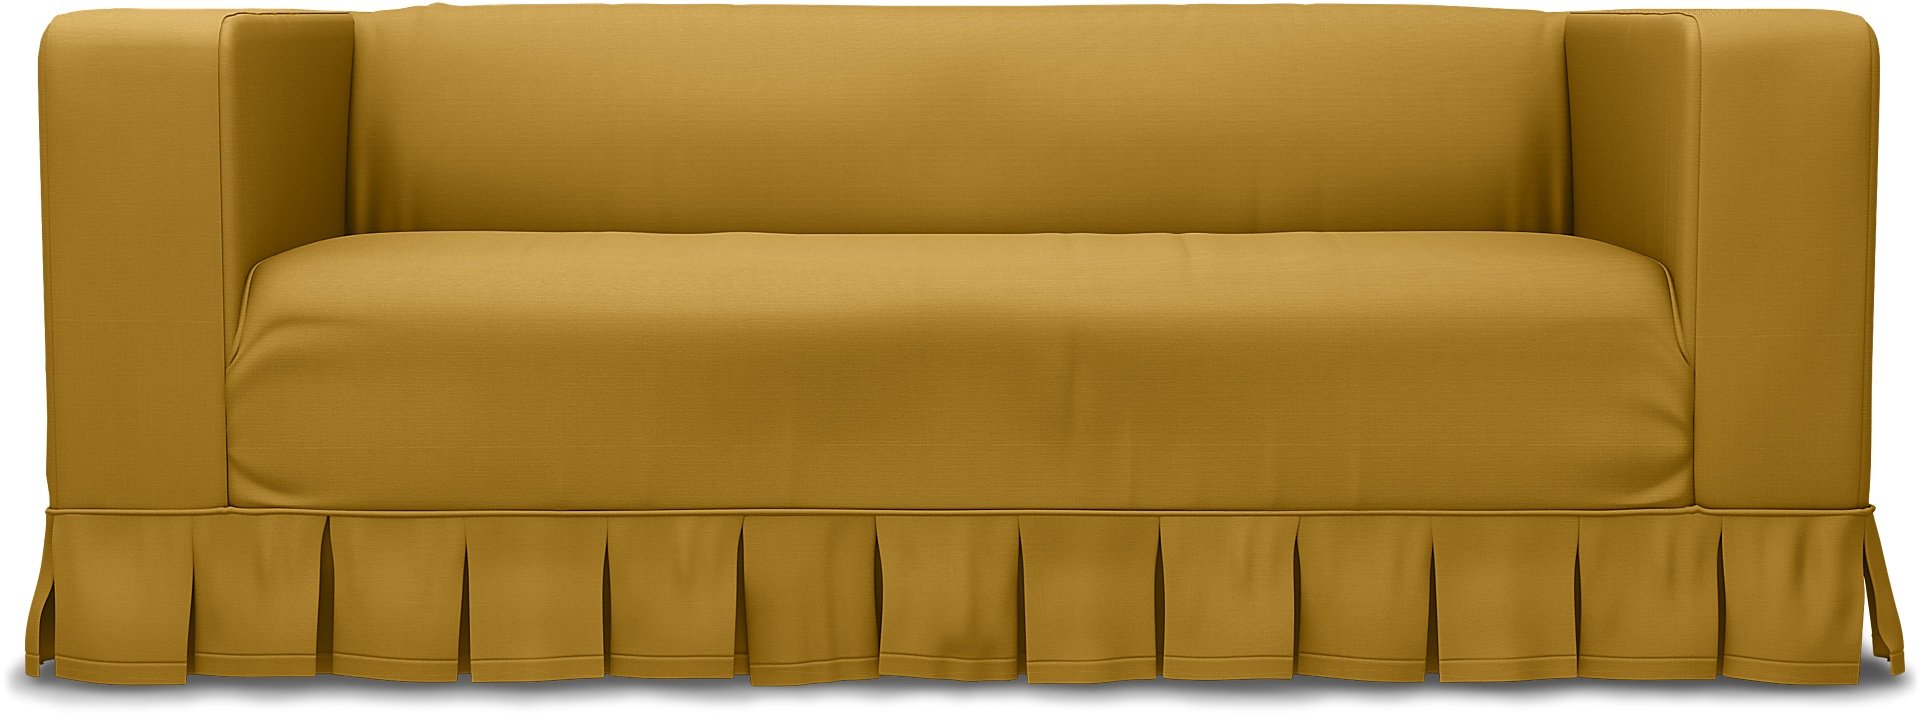 IKEA - Klippan 2 Seater Sofa Cover, Honey Mustard, Cotton - Bemz